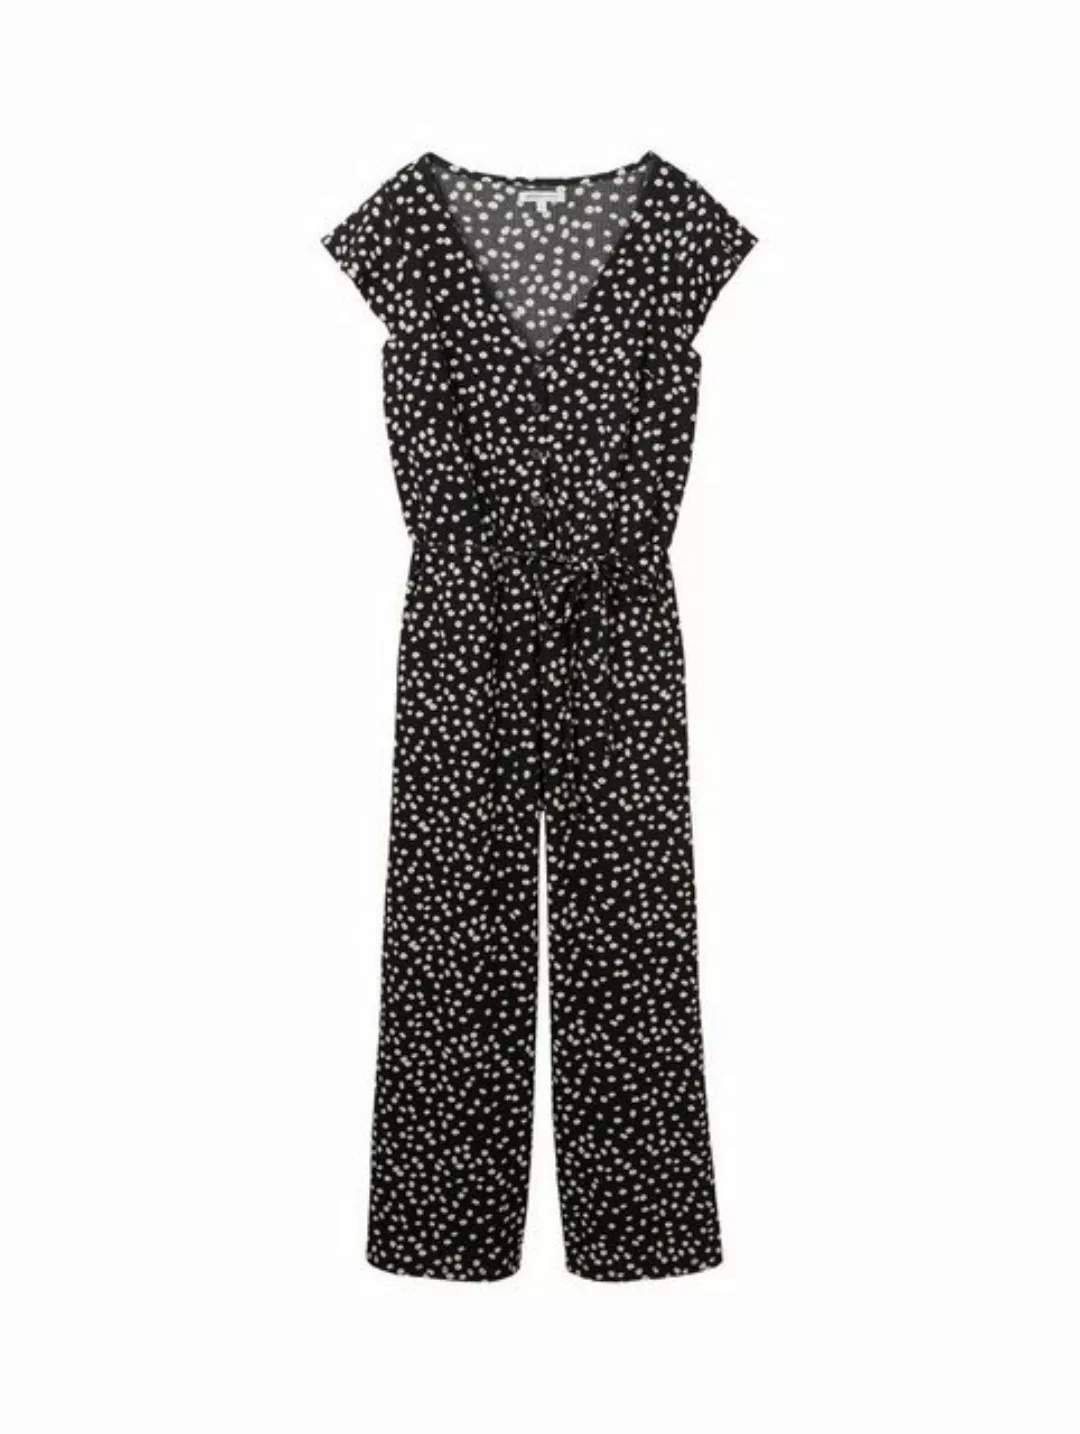 TOM TAILOR Denim Sommerkleid easy jumpsuit, black flower minimal print günstig online kaufen